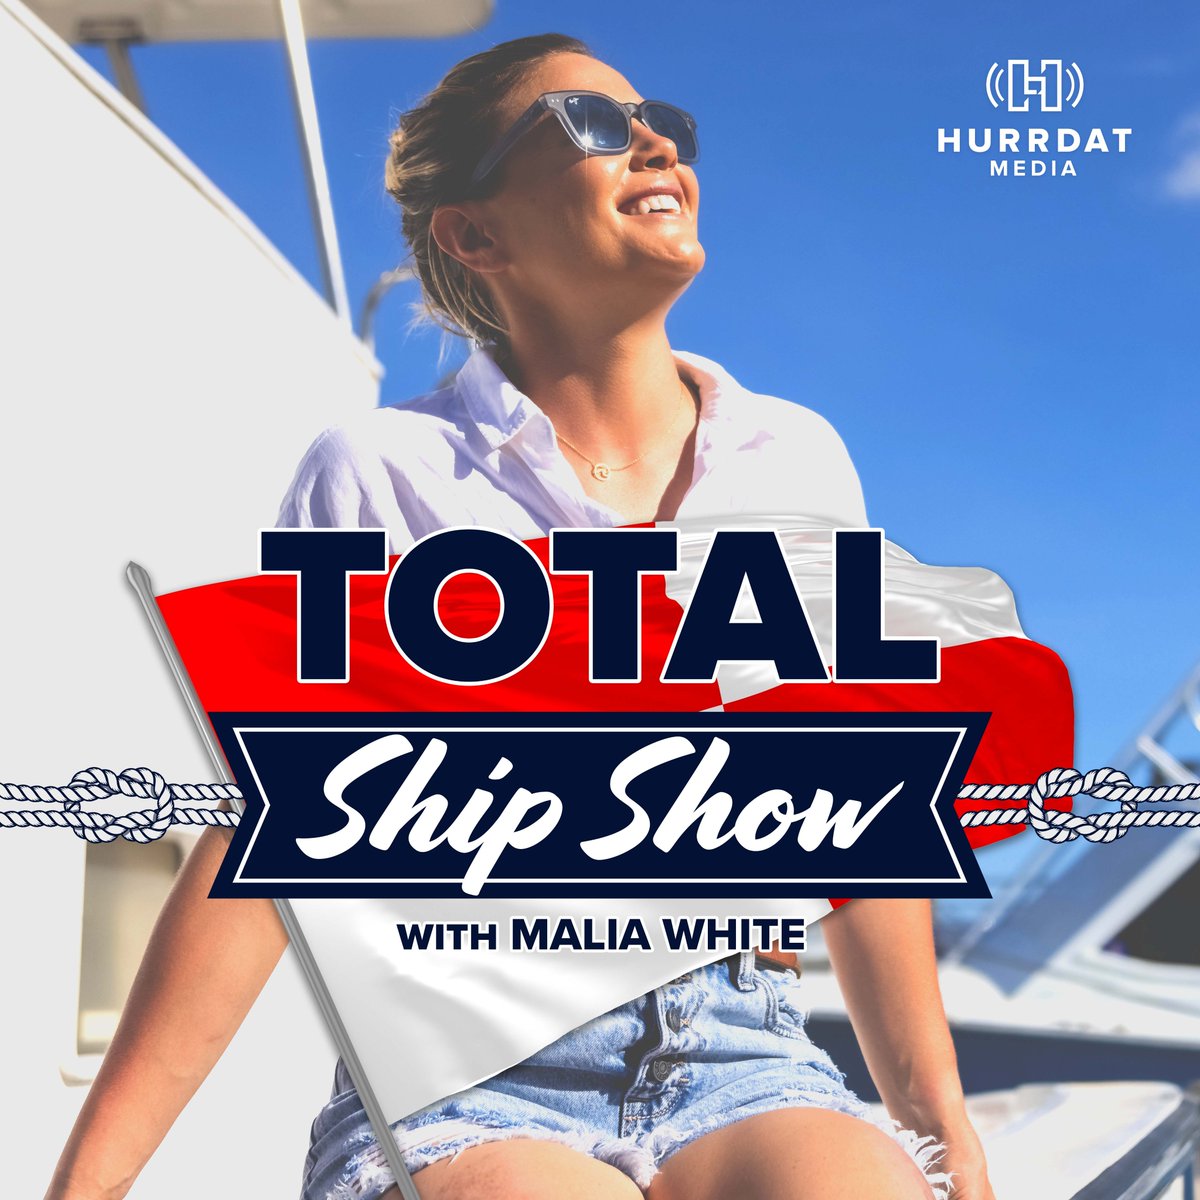 Season 1 of the Total Ship Show podcast with Malia White is streaming now! 🛥🎙🌊 Catch new episodes every Tuesday ➡️ hurrdatmedia.com/malia/ #TSS #totalshipshow #maliawhite